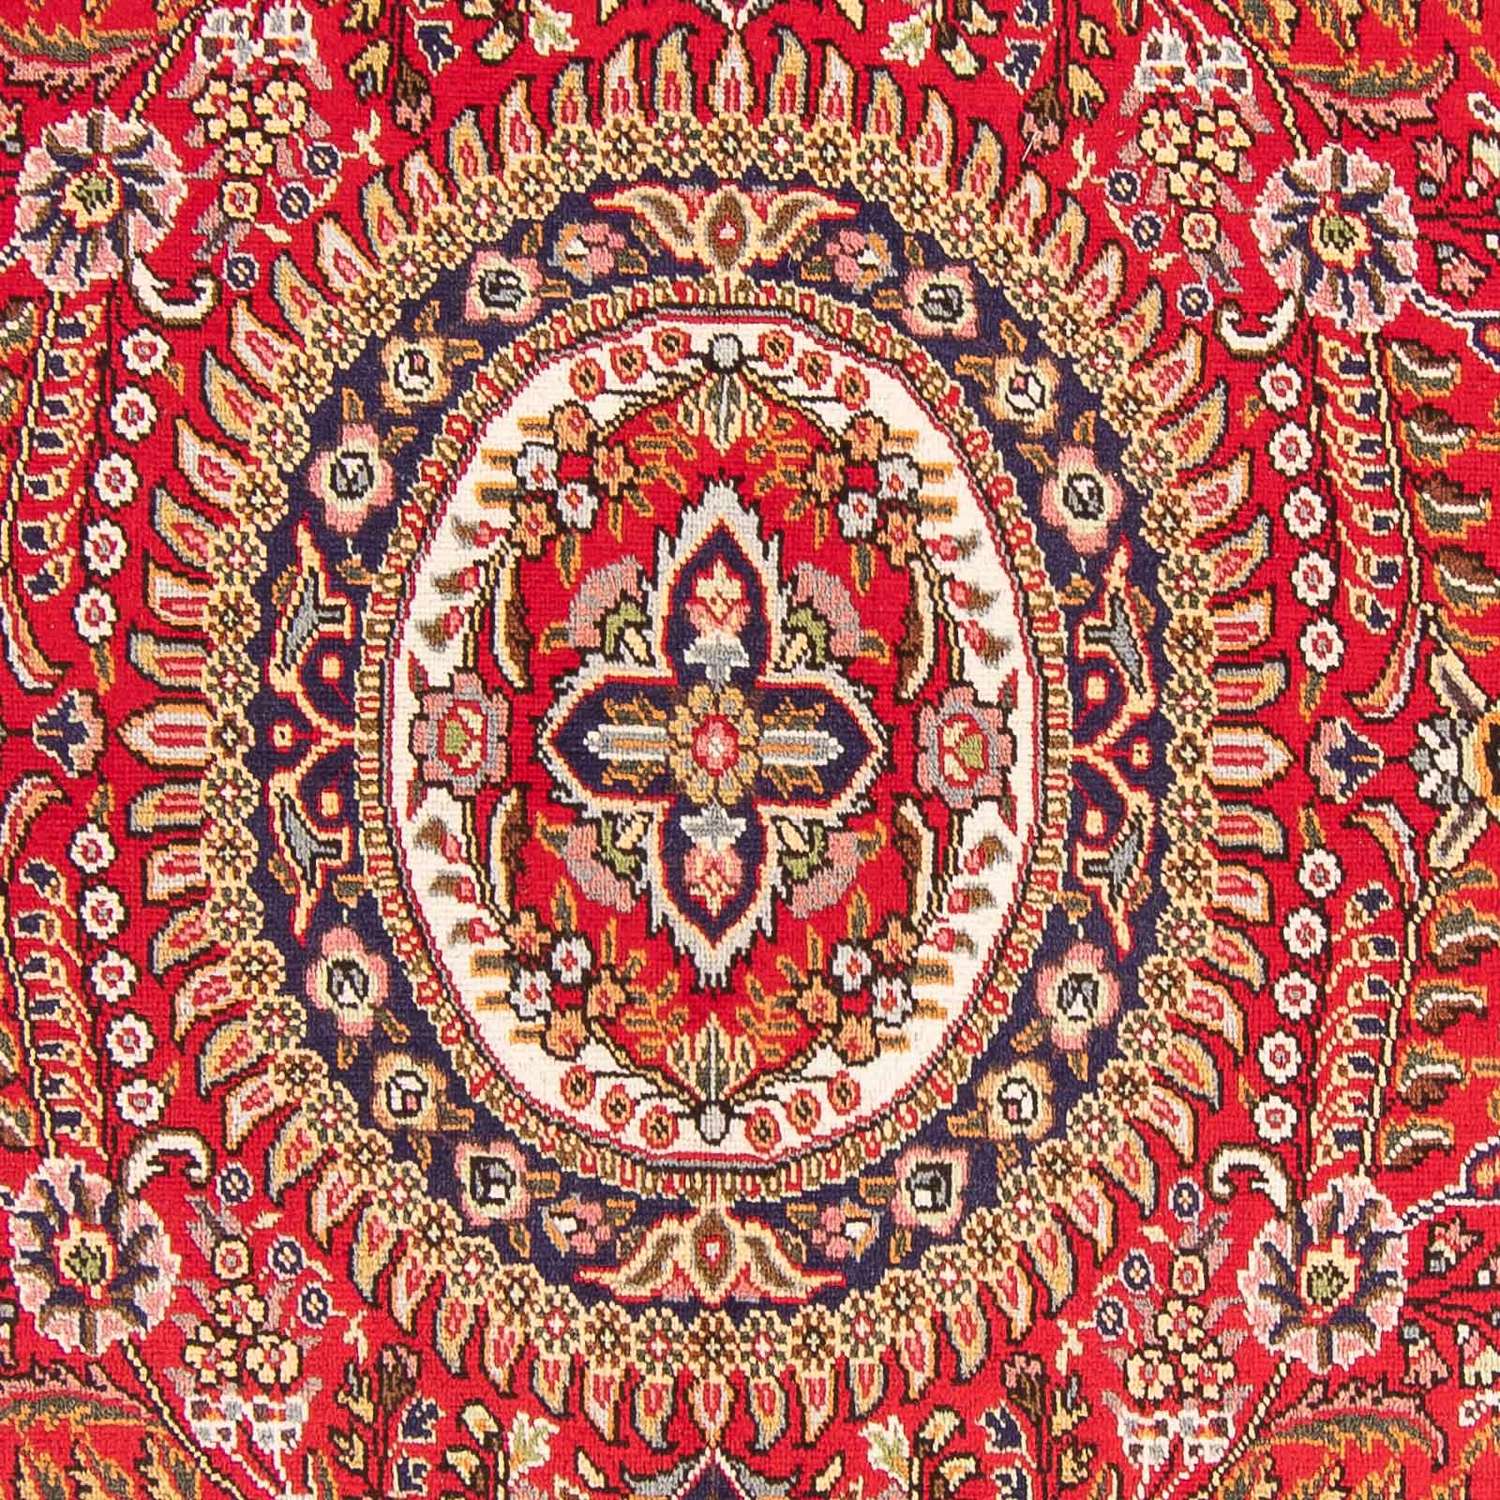 Perzisch tapijt - Tabriz - 300 x 205 cm - rood